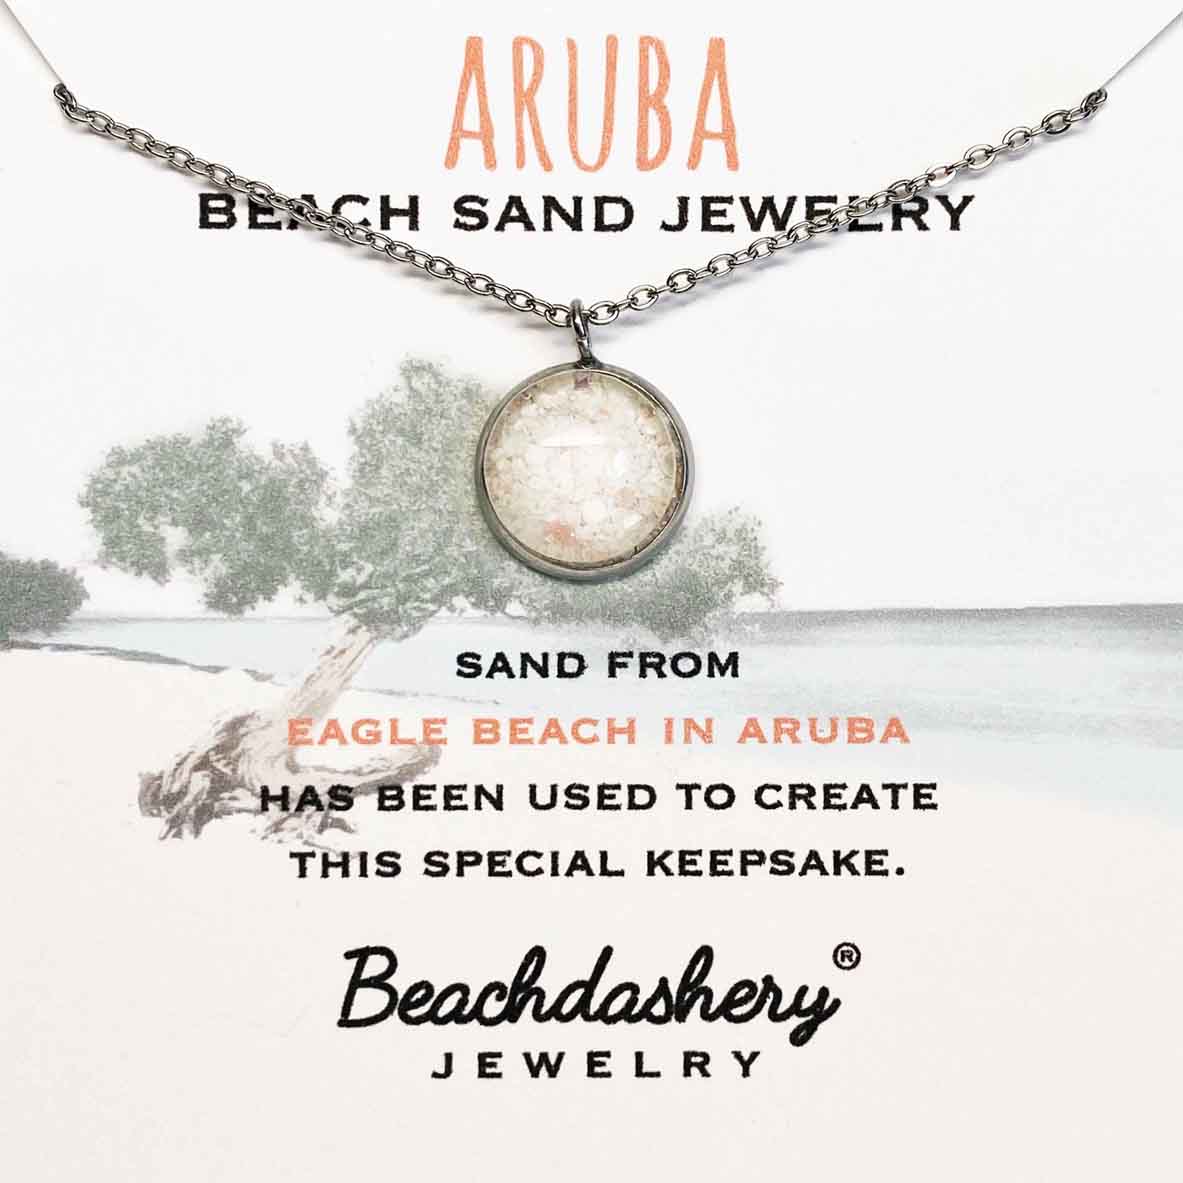 Load image into Gallery viewer, Aruba Beach Sand Jewelry Beachdashery® Jewelry
